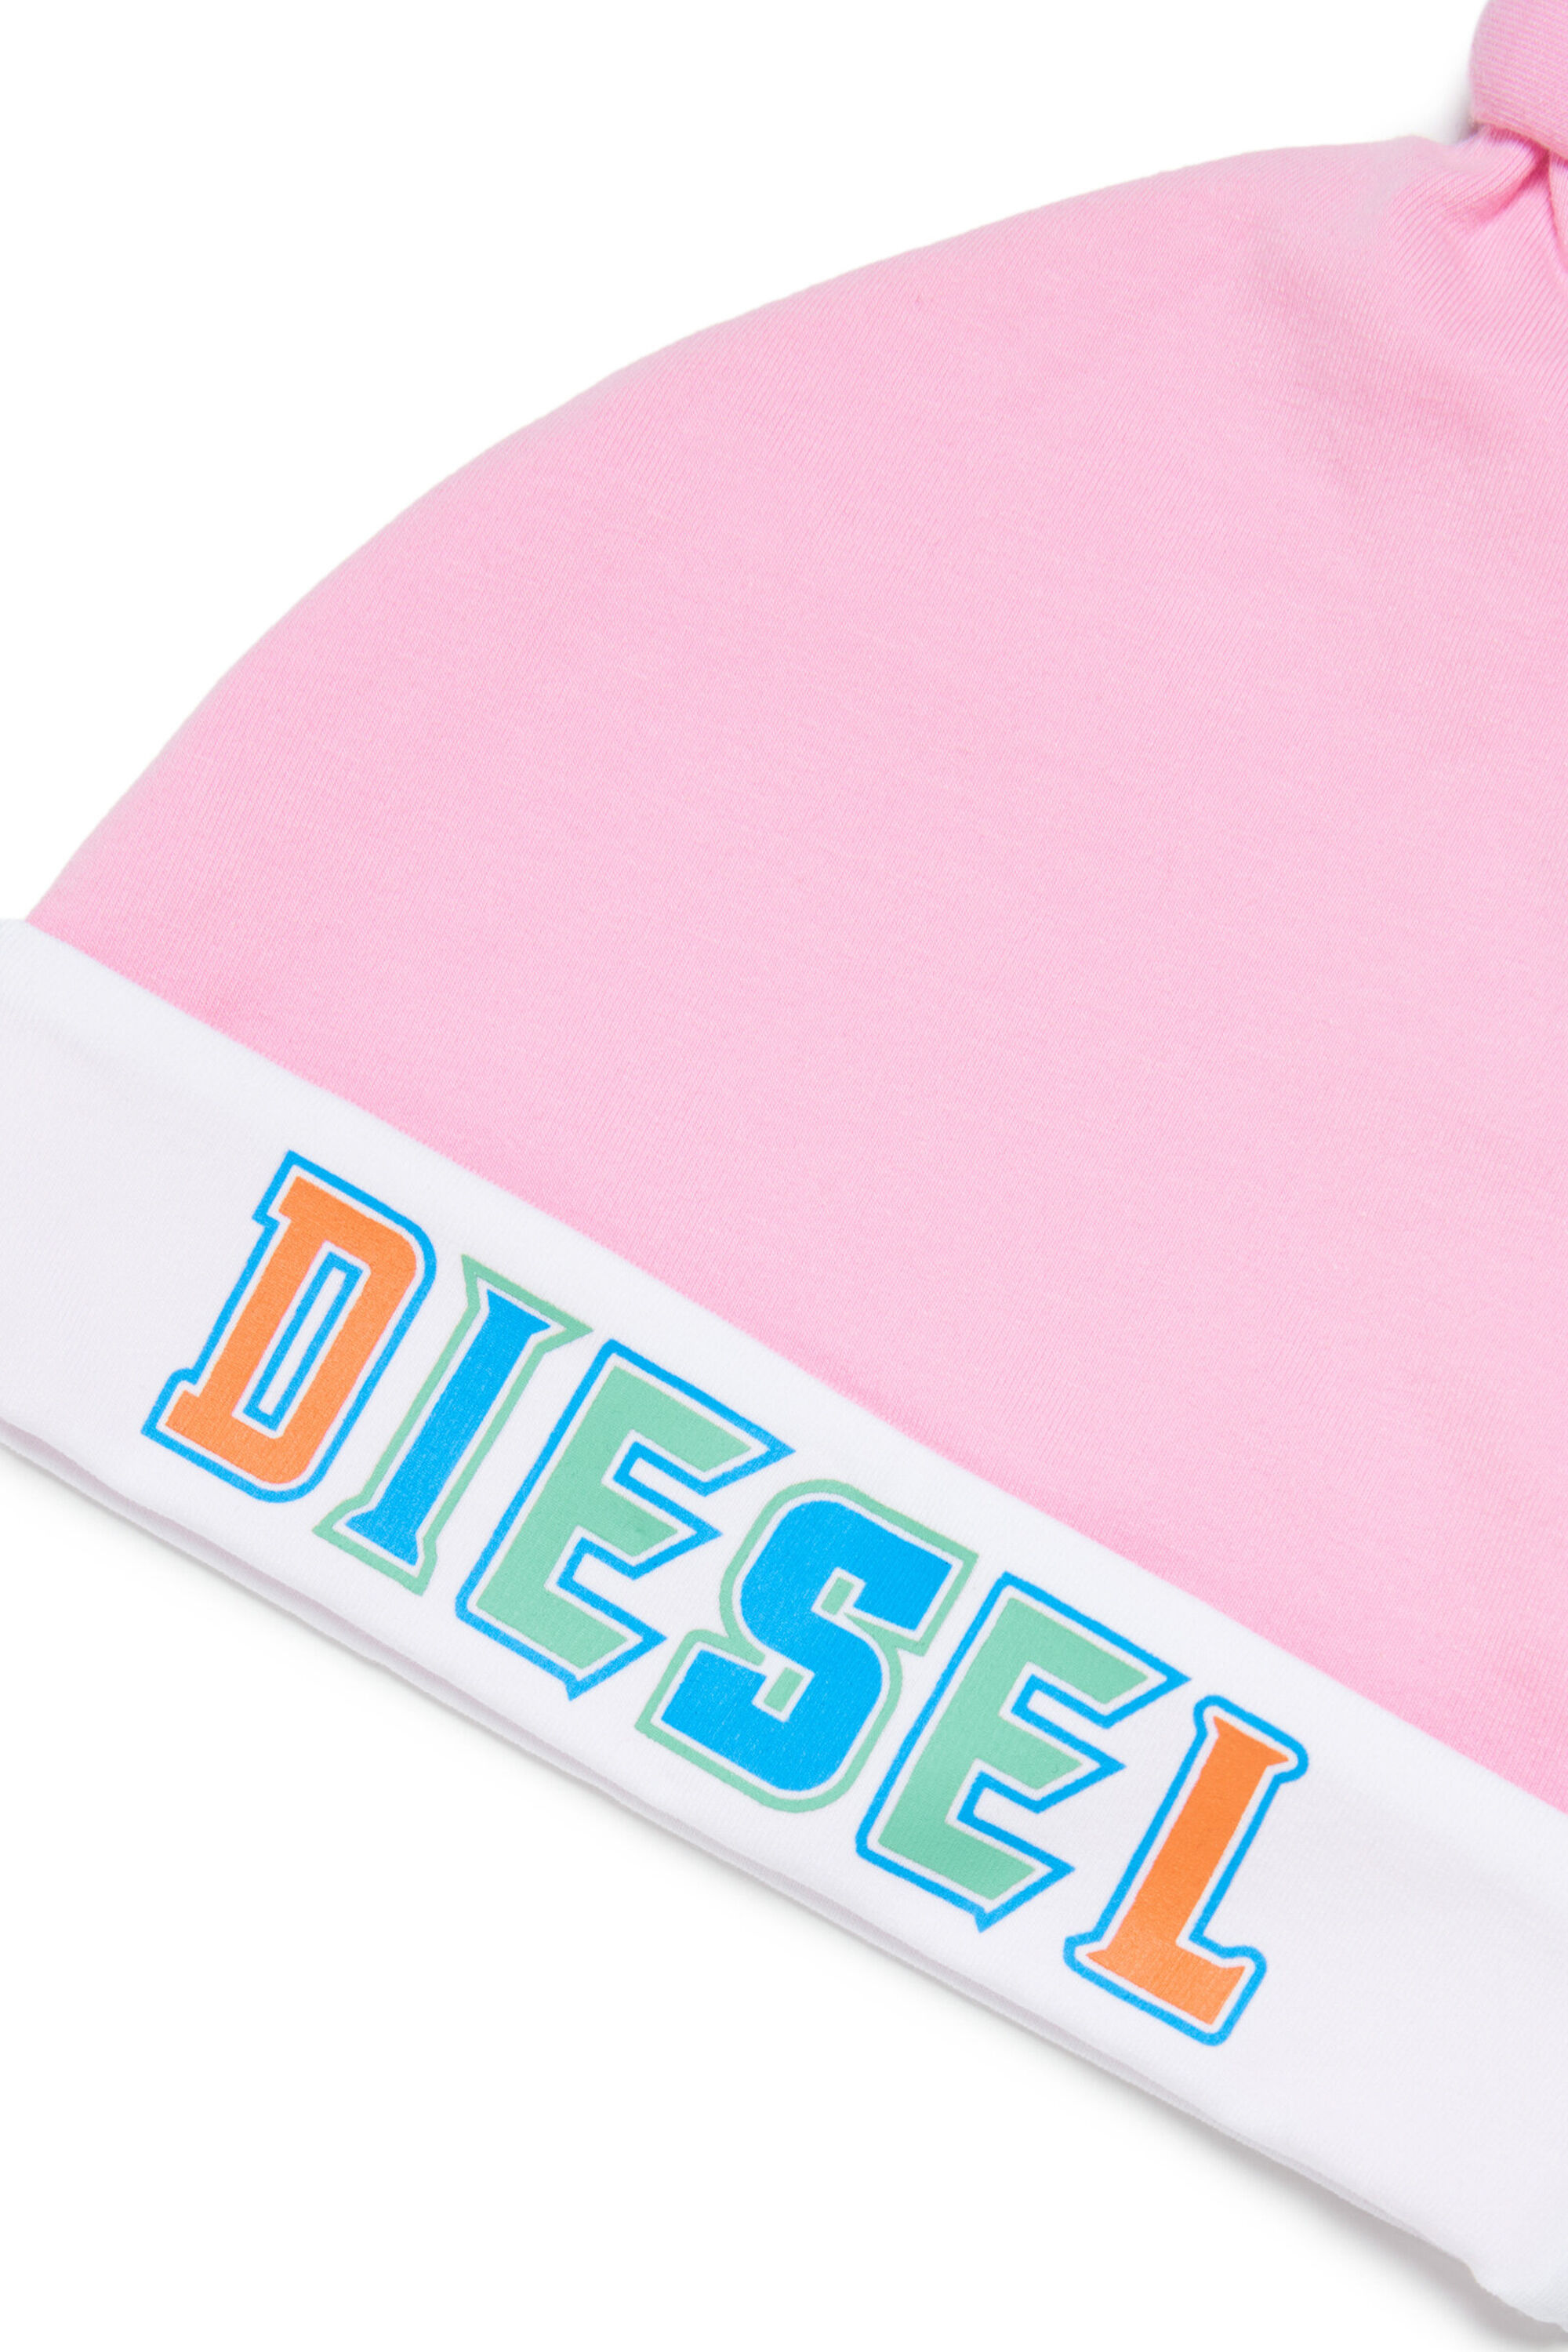 Diesel - FRIL-NB, Pink - Image 3